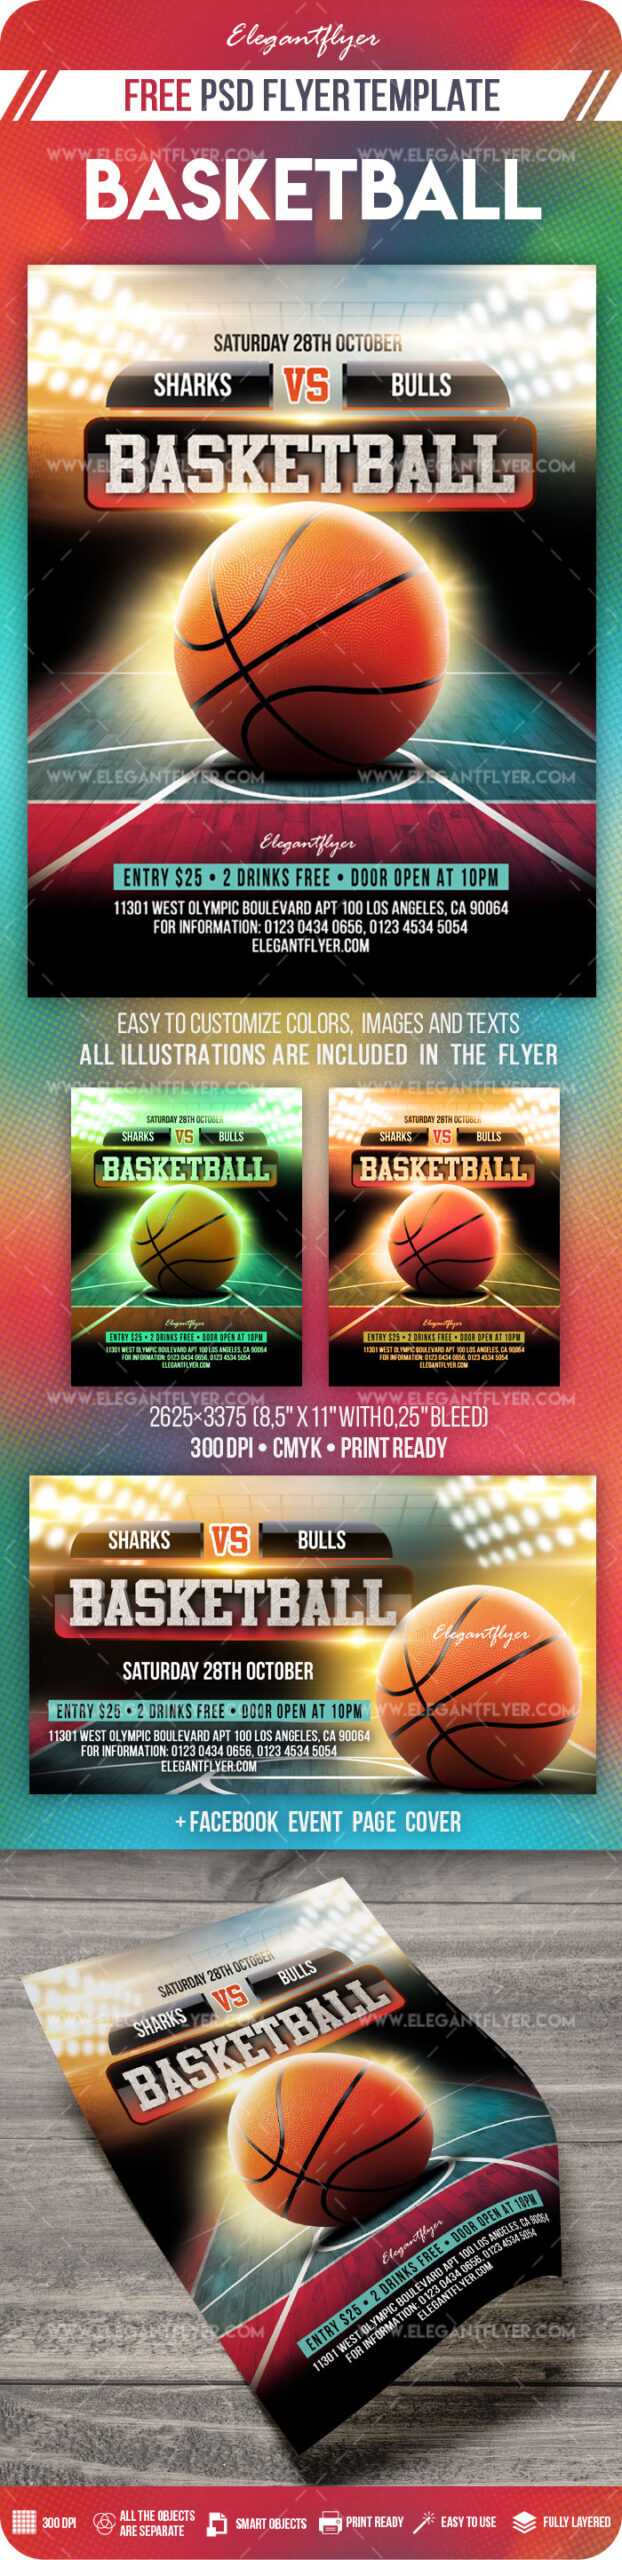 015 Basketball Camp Brochure Template Free Bigpreview Flyer With Regard To Basketball Camp Brochure Template